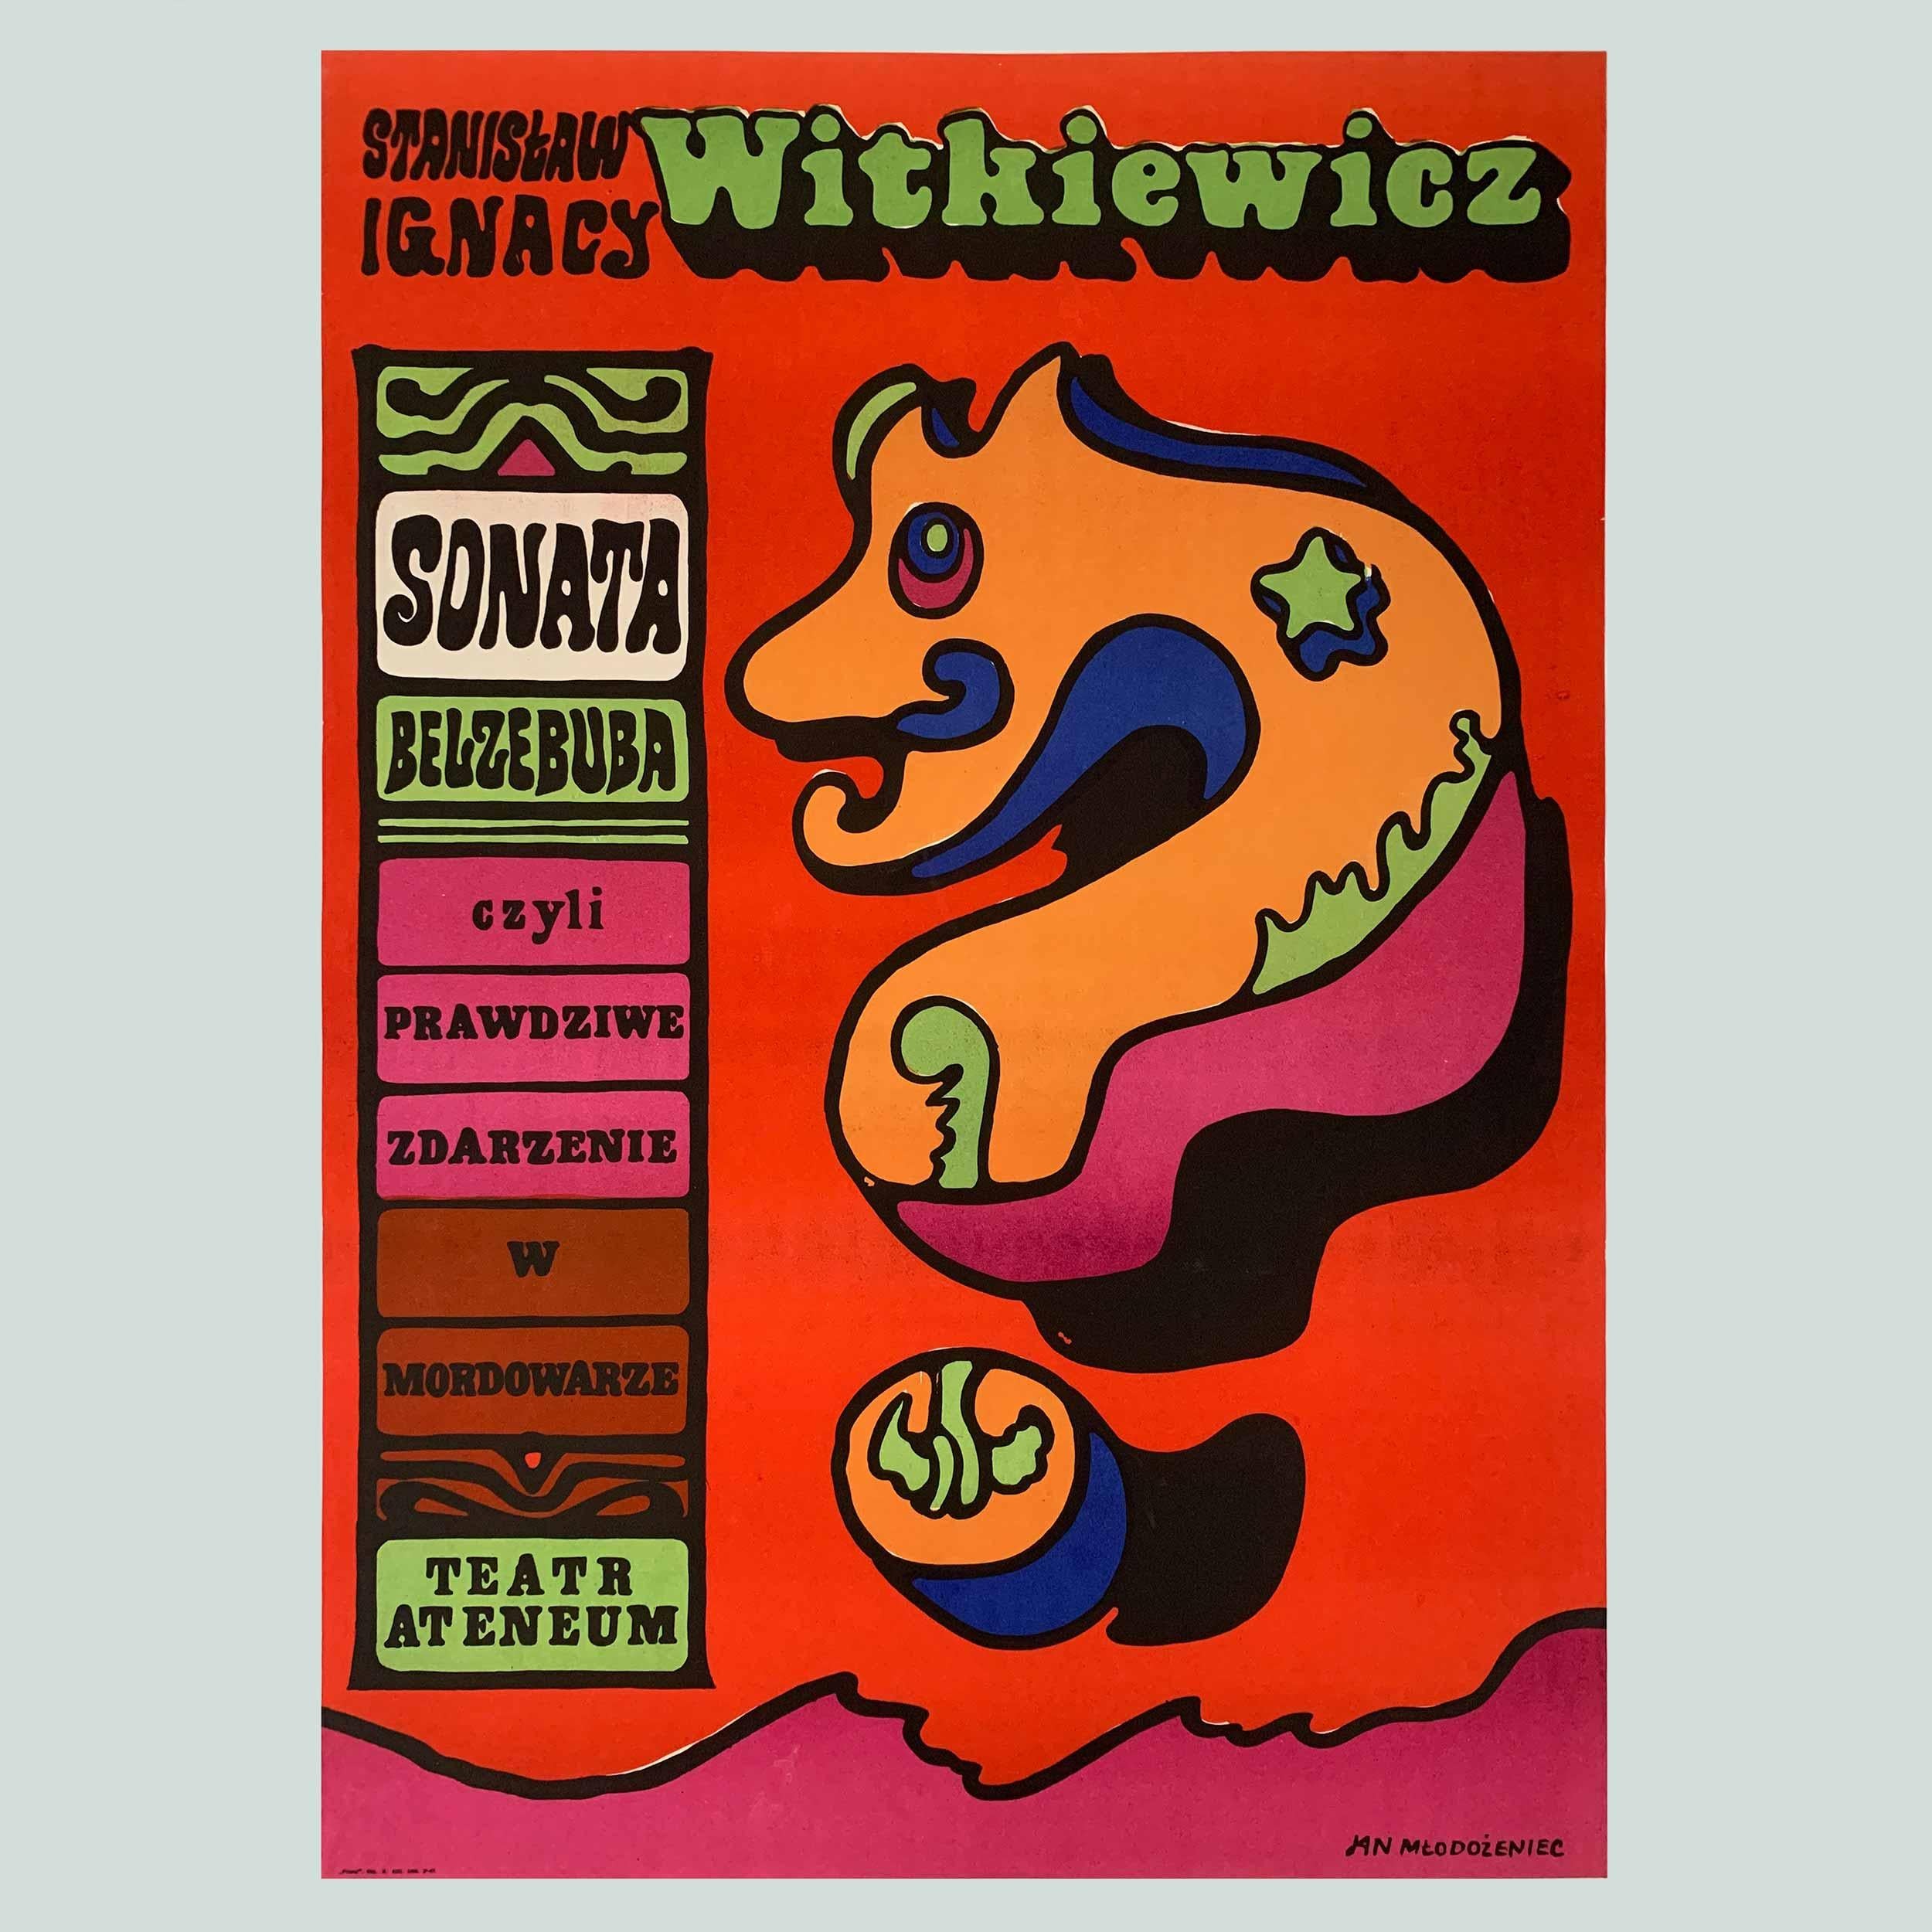 Mid-Century Modern Sonata Belzebuba, Vintage Polish Theatre Poster by Jan Mlodozeniec, 1969 For Sale